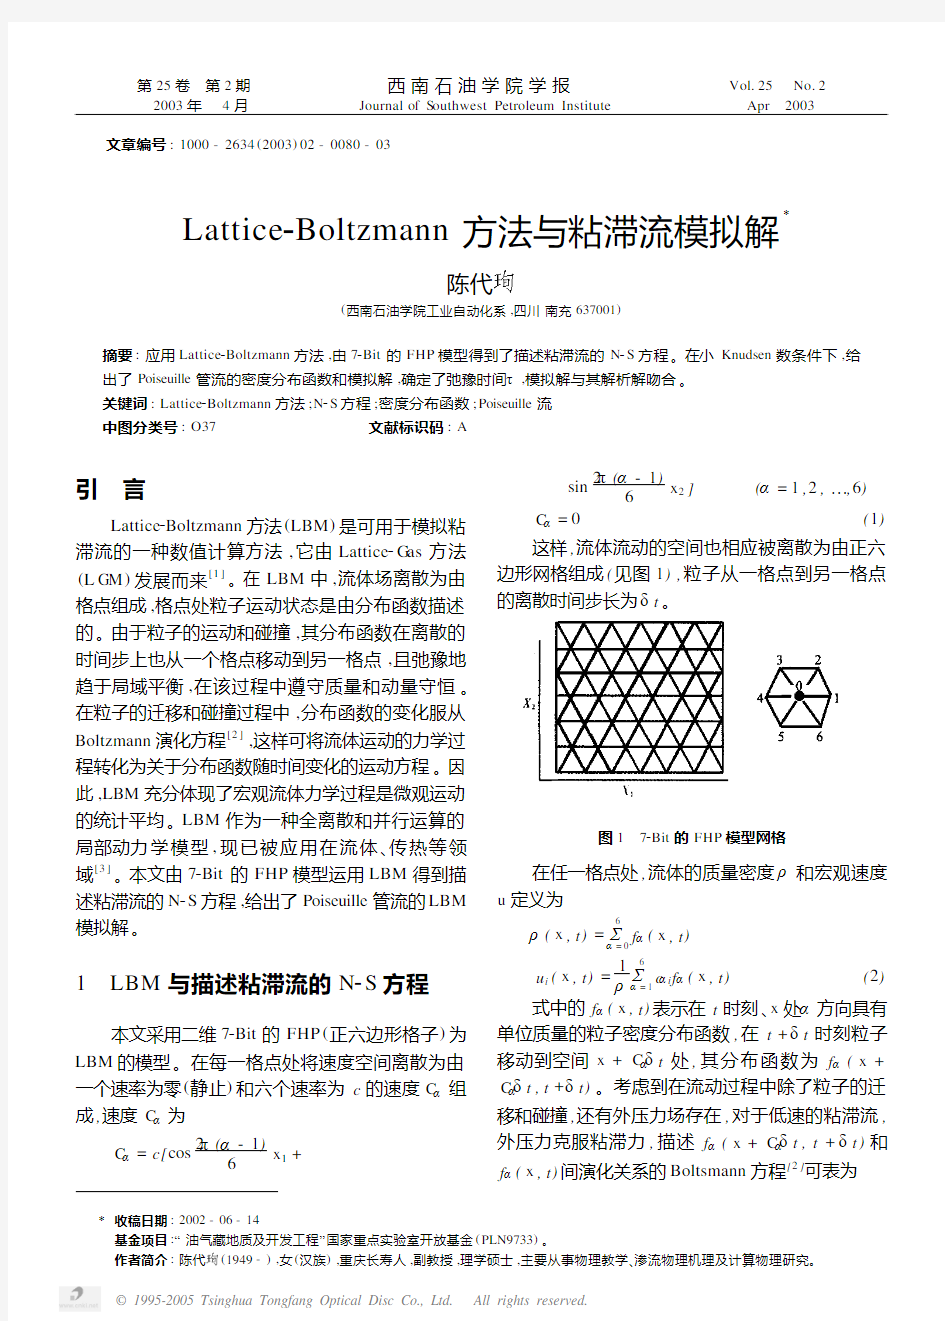 Lattice_Boltzmann方法与粘滞流模拟解